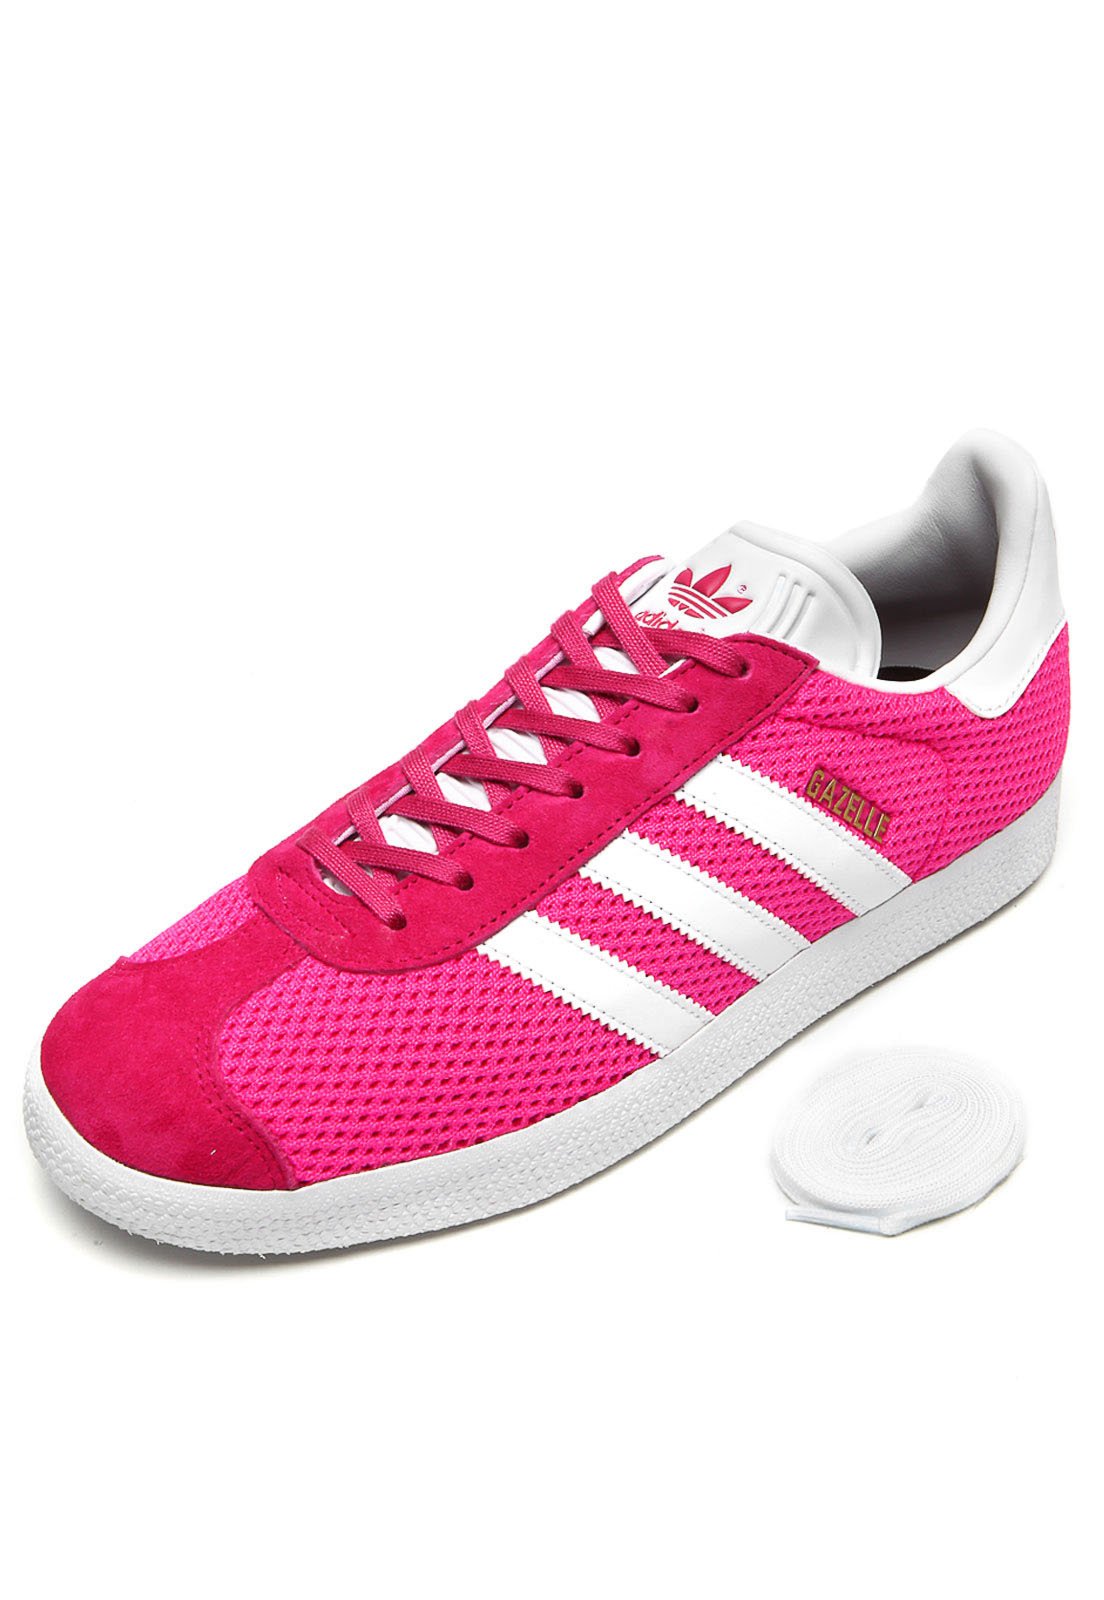 tenis adidas rosa neon